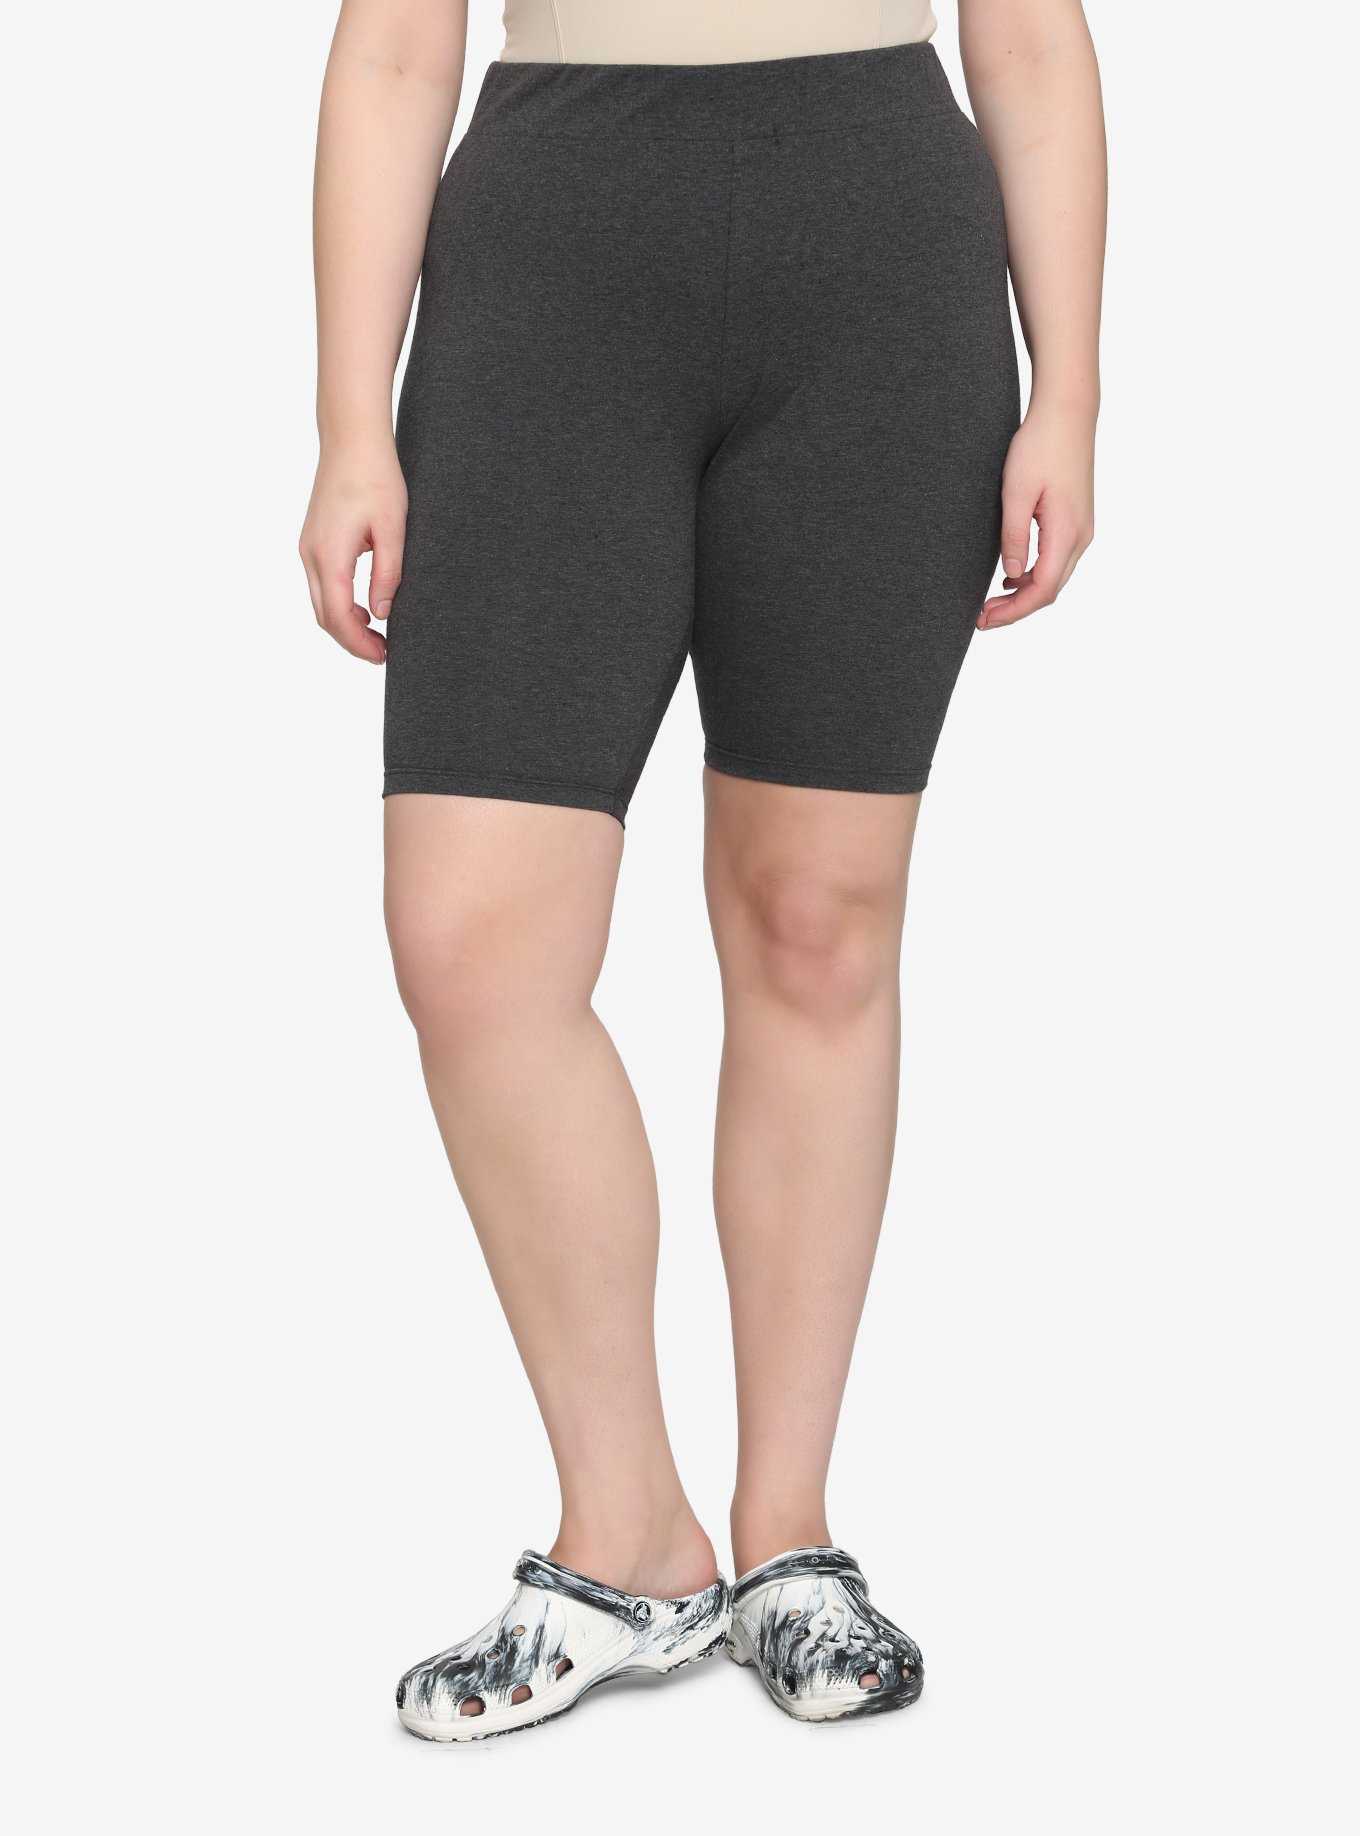 Charcoal Grey 10 Inch Inseam Bike Shorts Plus Size, , hi-res